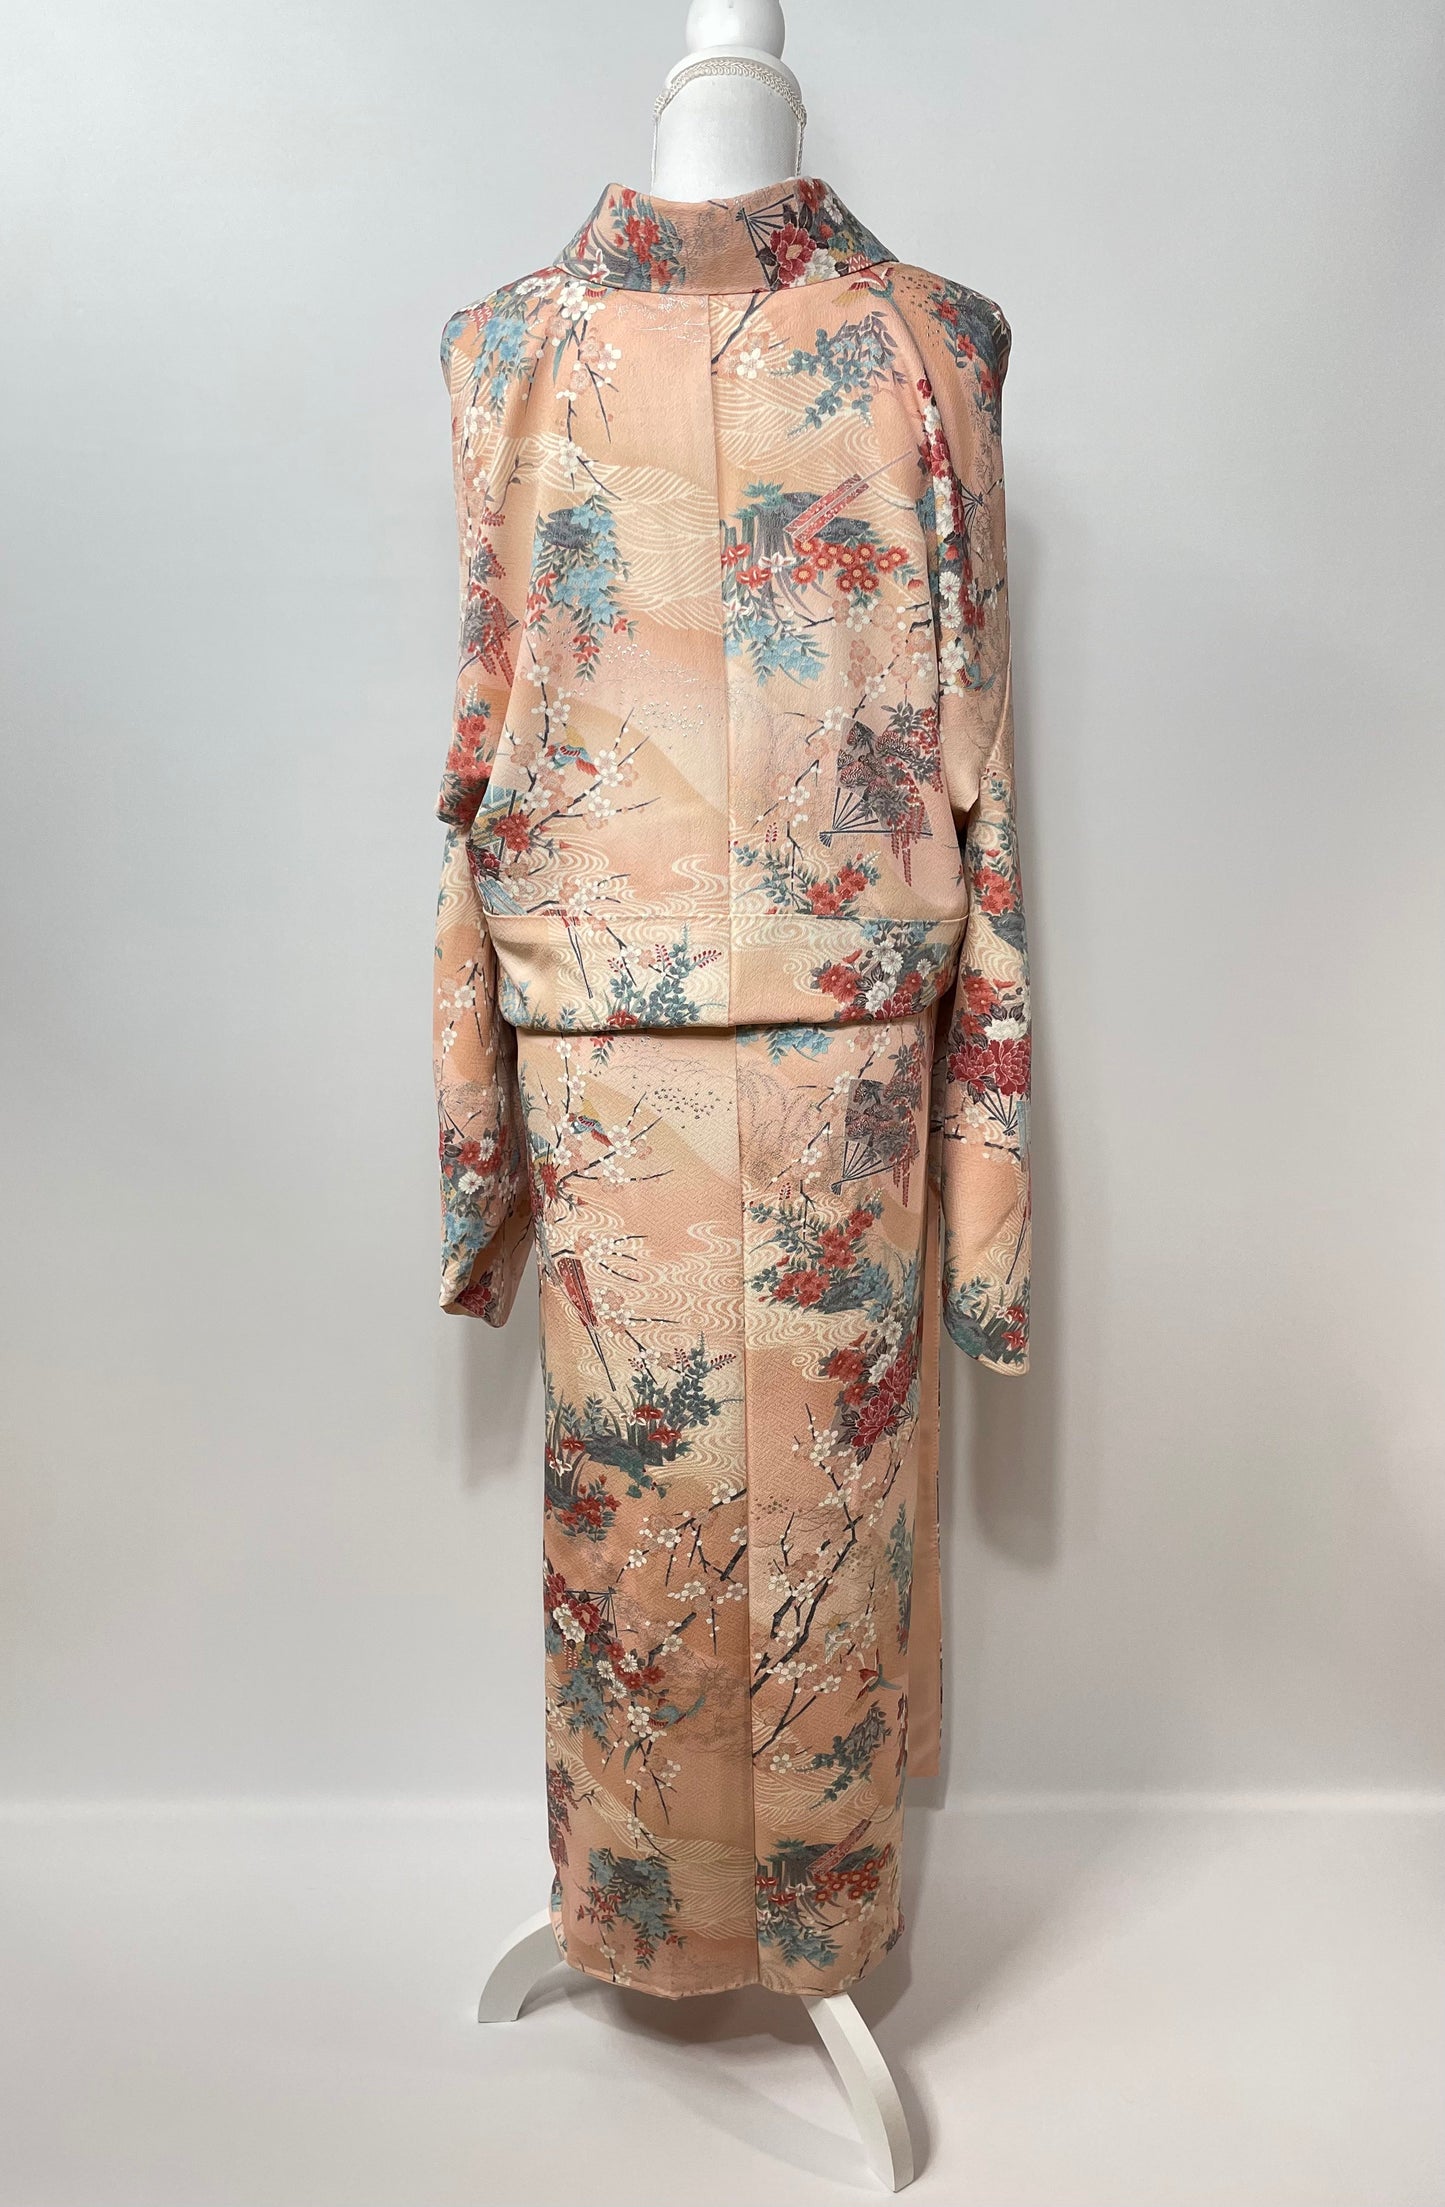 Traditional Silk Kimono - Made in Japan - Pink - Four-season garment